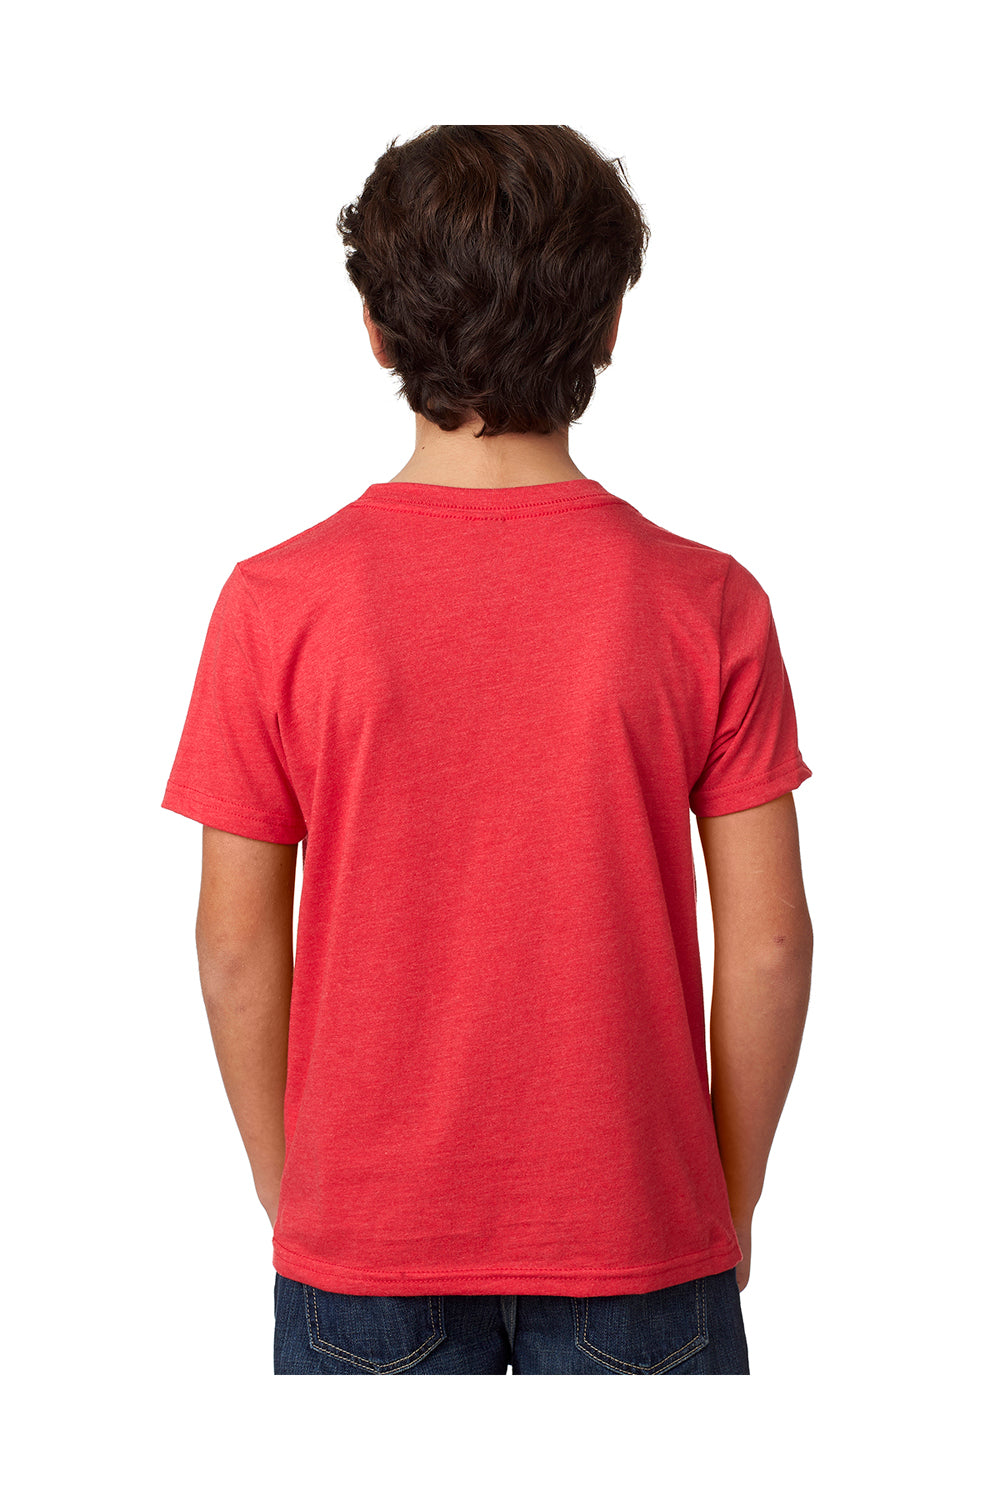 Next Level 3312 Youth CVC Jersey Short Sleeve Crewneck T-Shirt Red Back